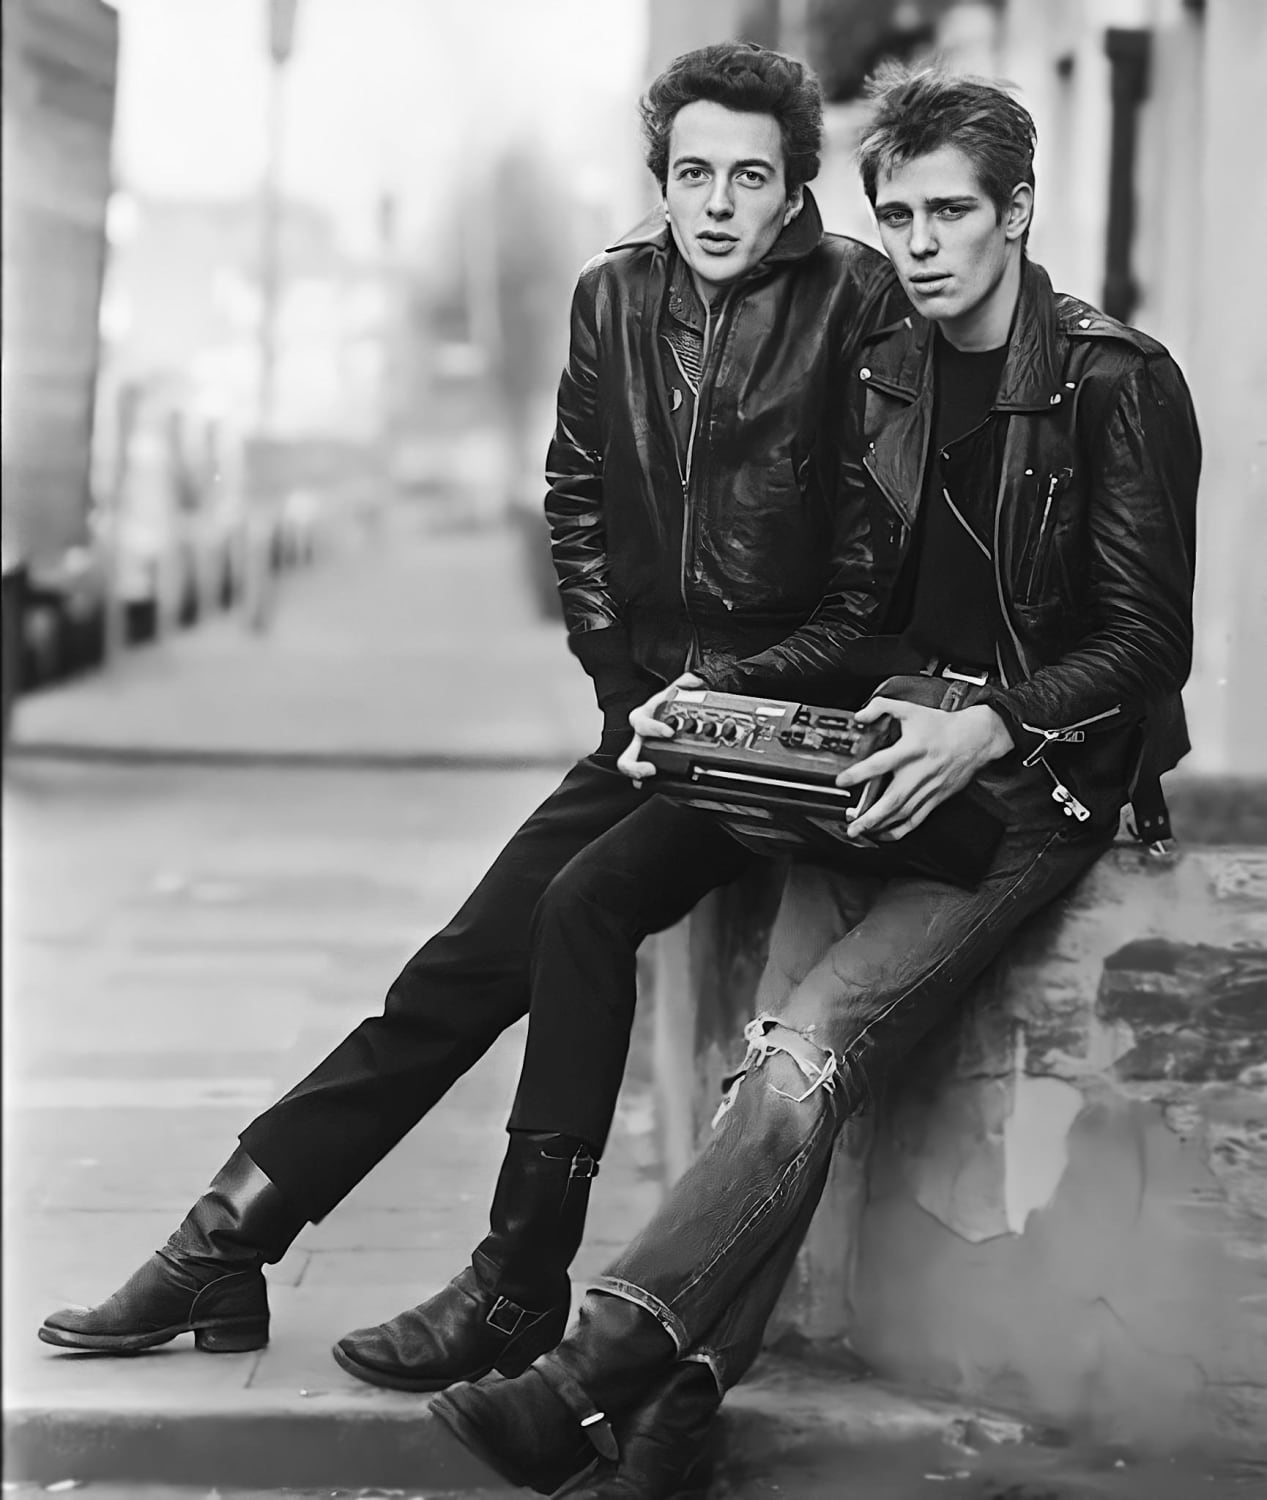 Joe Strummer & Paul Simonon (The Clash)